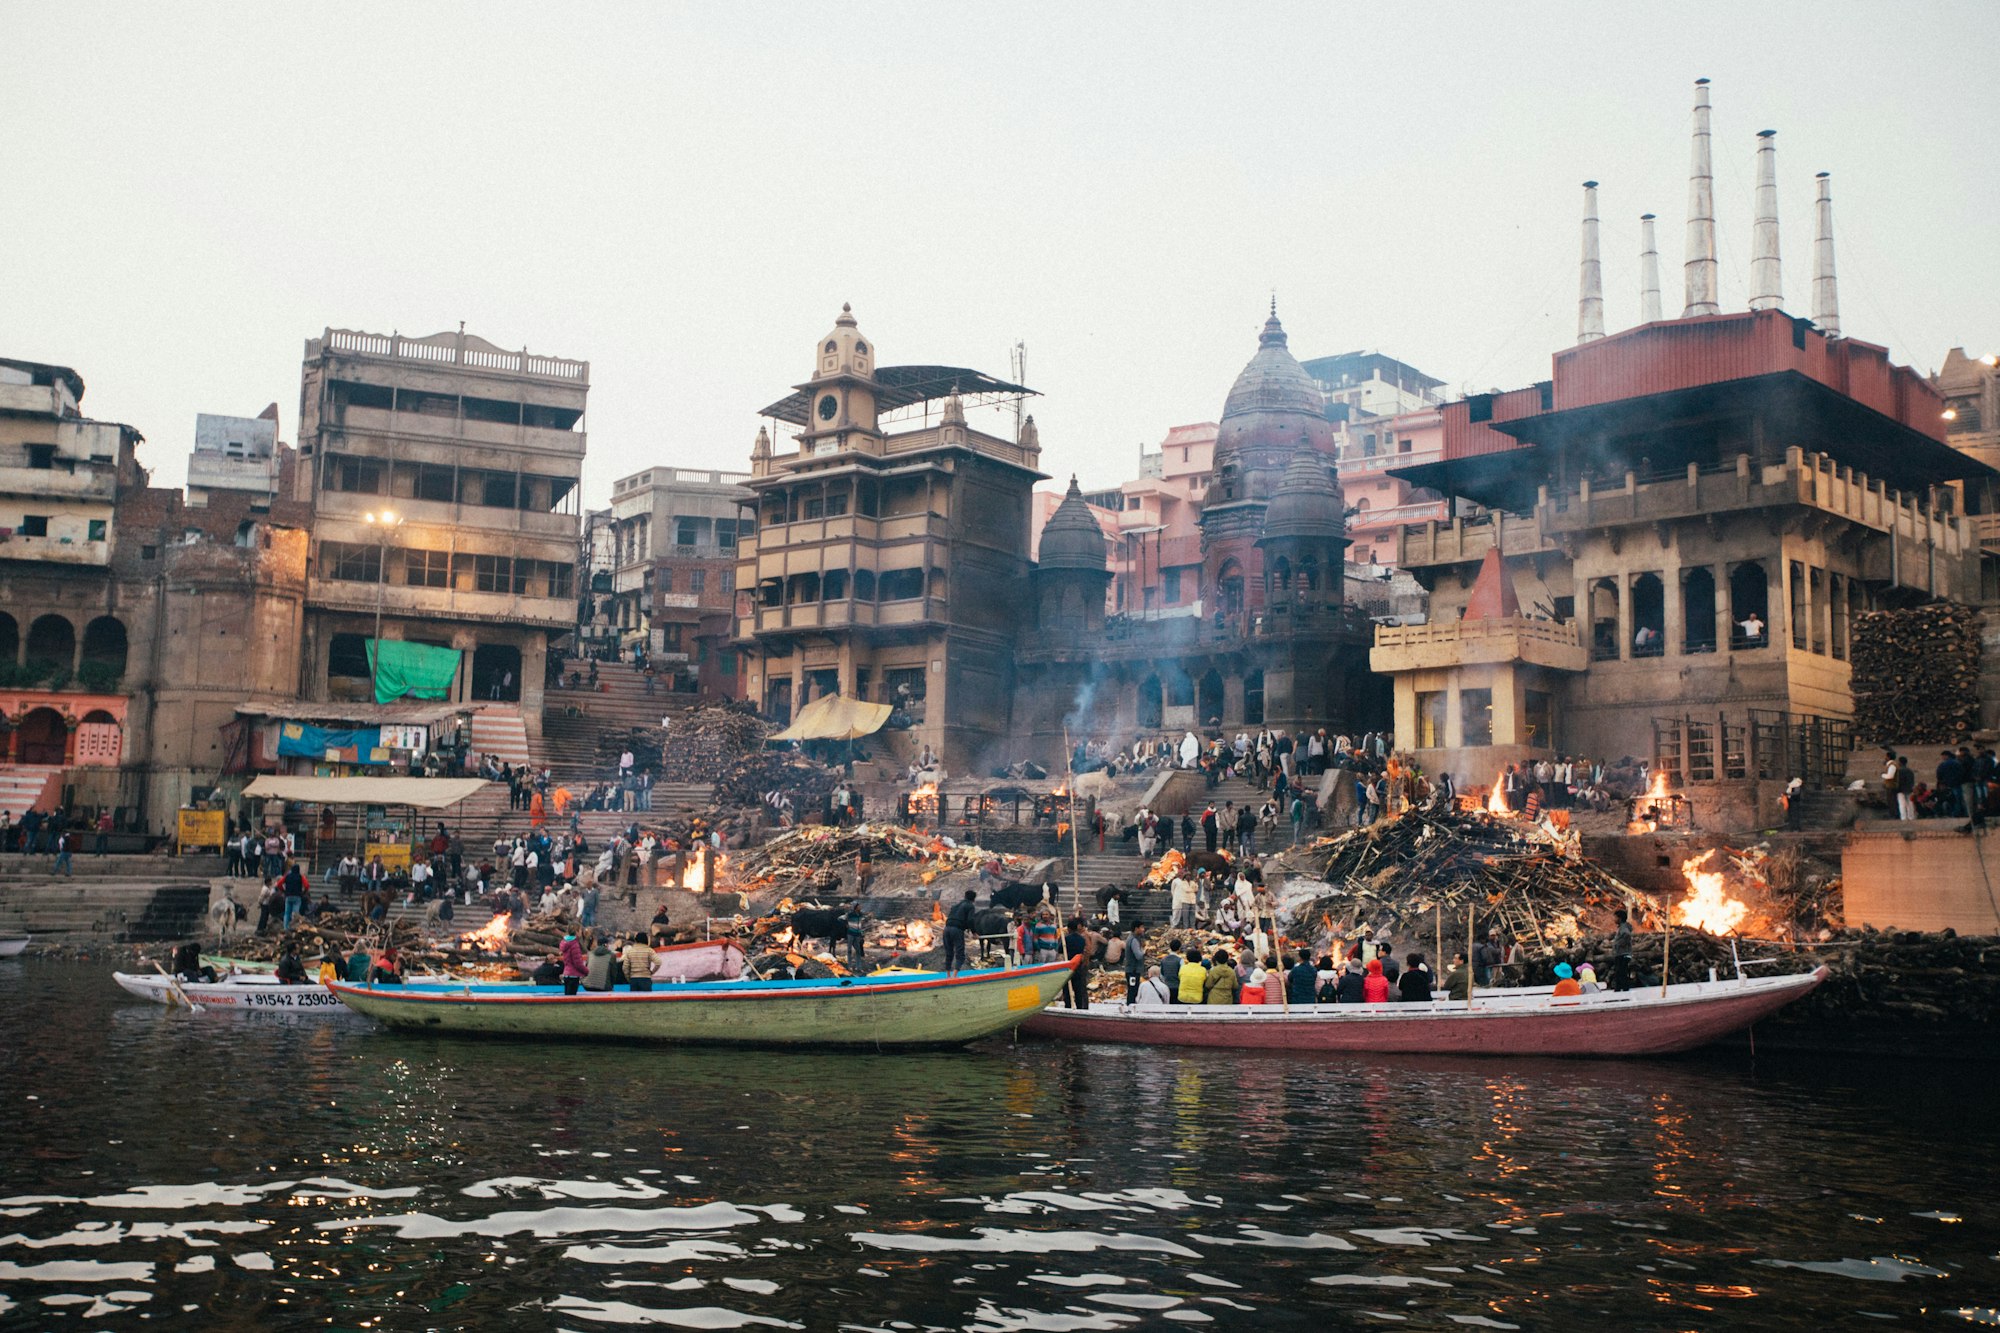 Varanasi, Banaras, Kashi, and Ganga